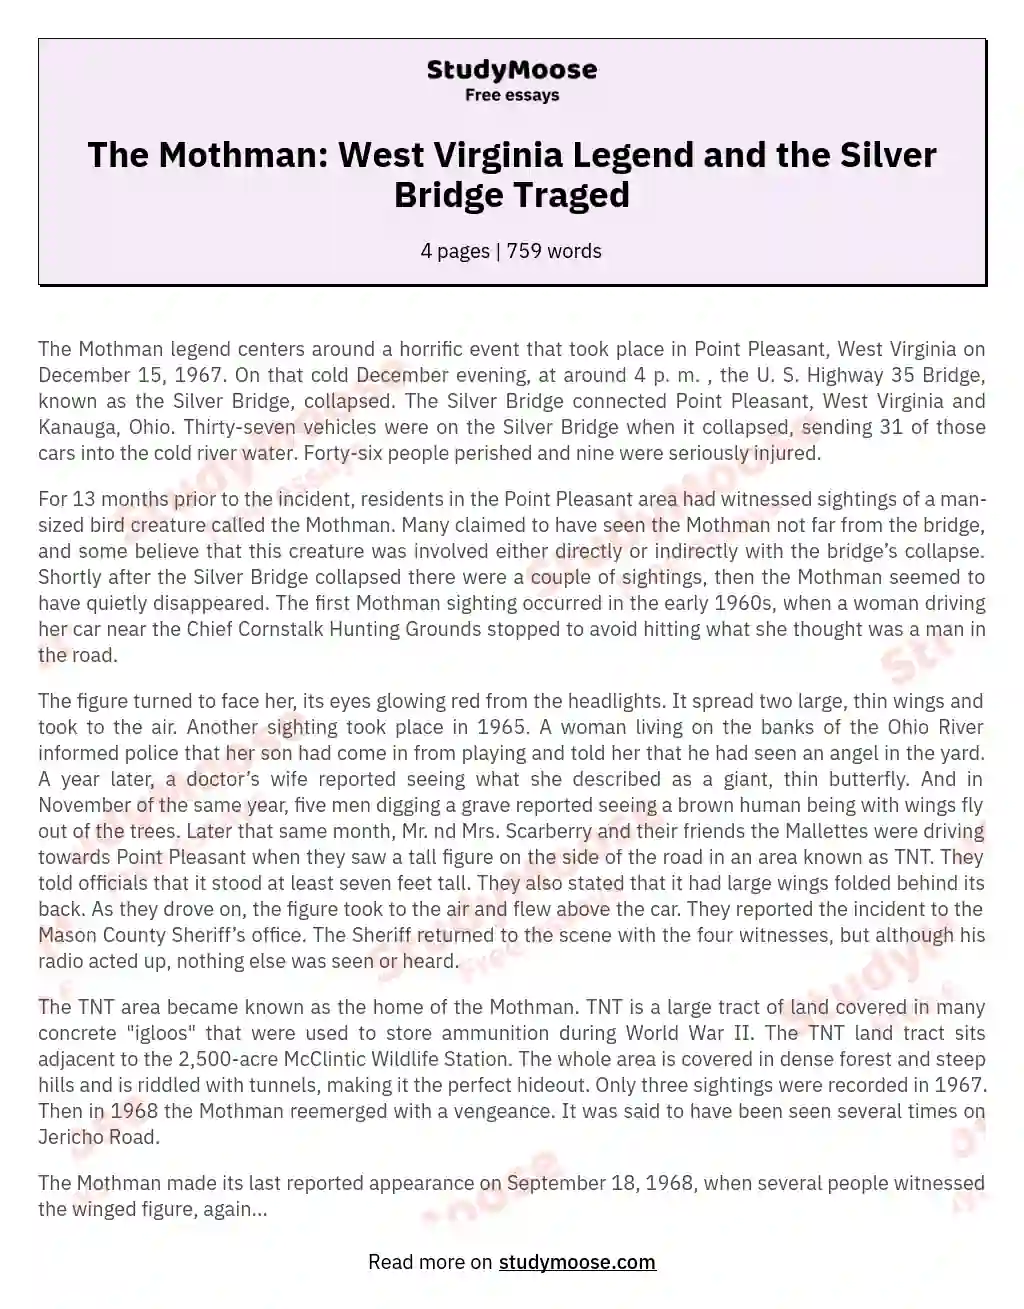 The Mothman: West Virginia Legend and the Silver Bridge Traged essay